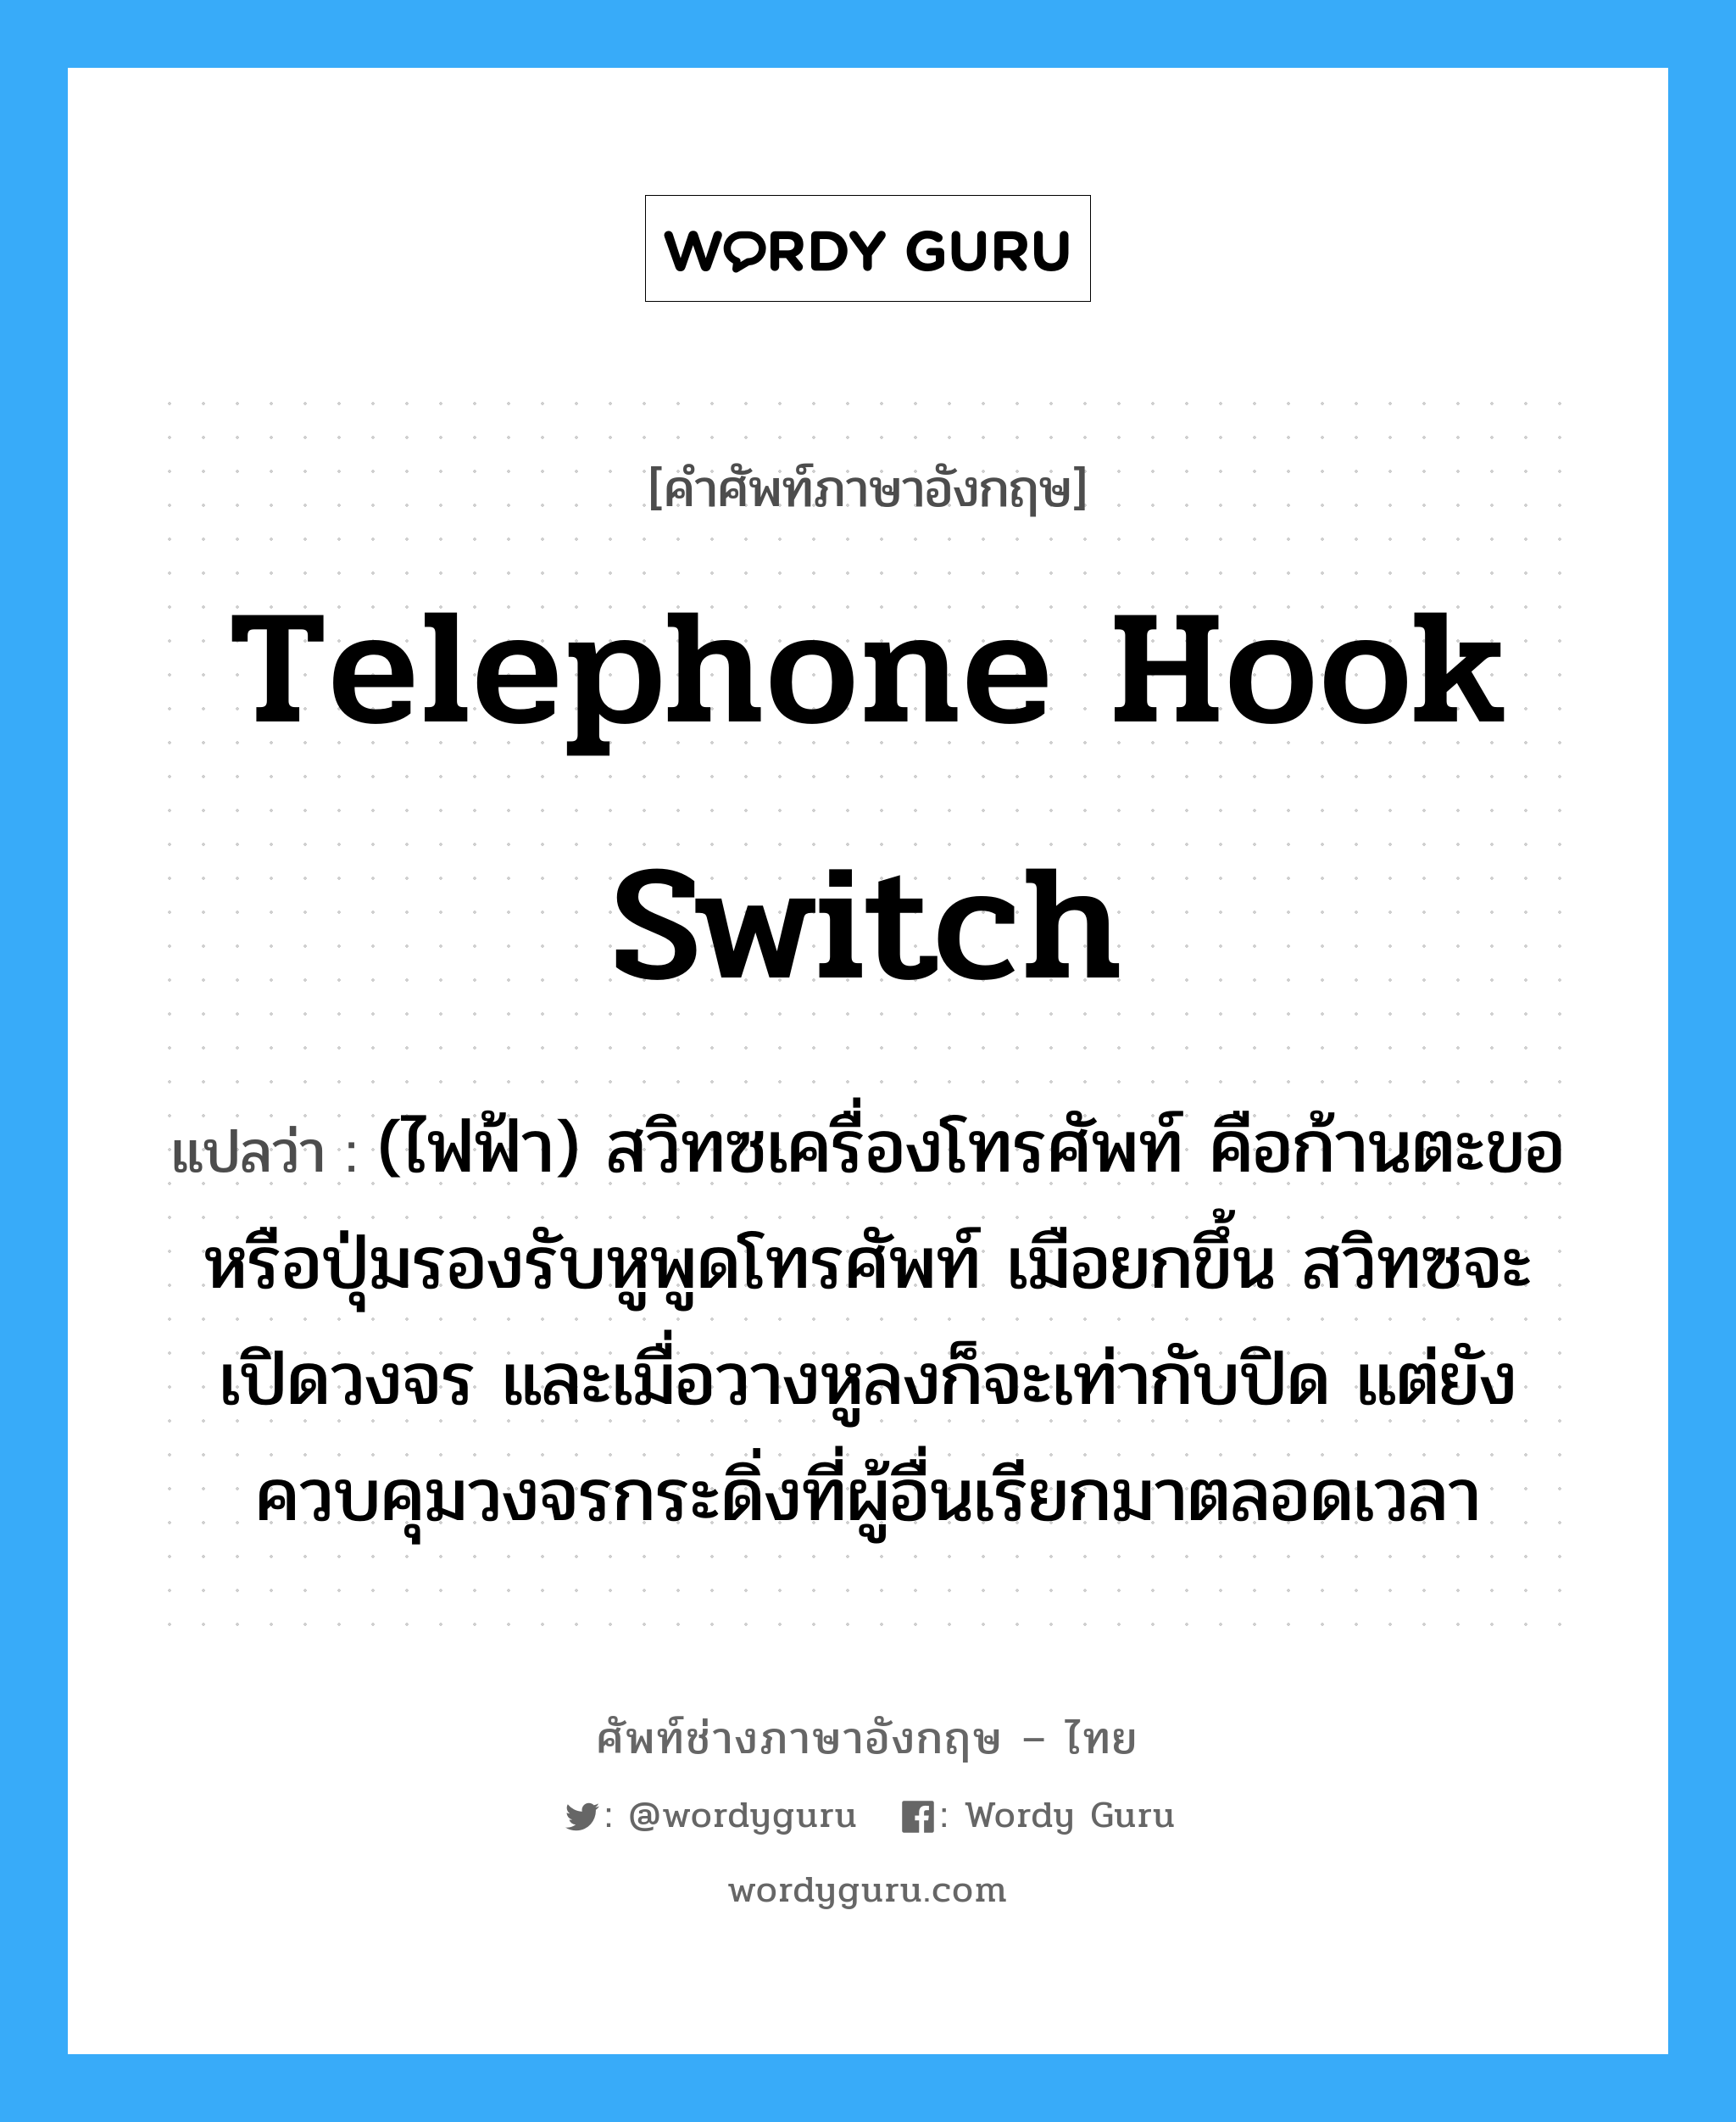 telephone hook switch แปลว่า?, คำศัพท์ช่างภาษาอังกฤษ - ไทย telephone hook switch คำศัพท์ภาษาอังกฤษ telephone hook switch แปลว่า (ไฟฟ้า) สวิทซเครื่องโทรศัพท์ คือก้านตะขอหรือปุ่มรองรับหูพูดโทรศัพท์ เมือยกขึ้น สวิทซจะเปิดวงจร และเมื่อวางหูลงก็จะเท่ากับปิด แต่ยังควบคุมวงจรกระดิ่งที่ผู้อื่นเรียกมาตลอดเวลา